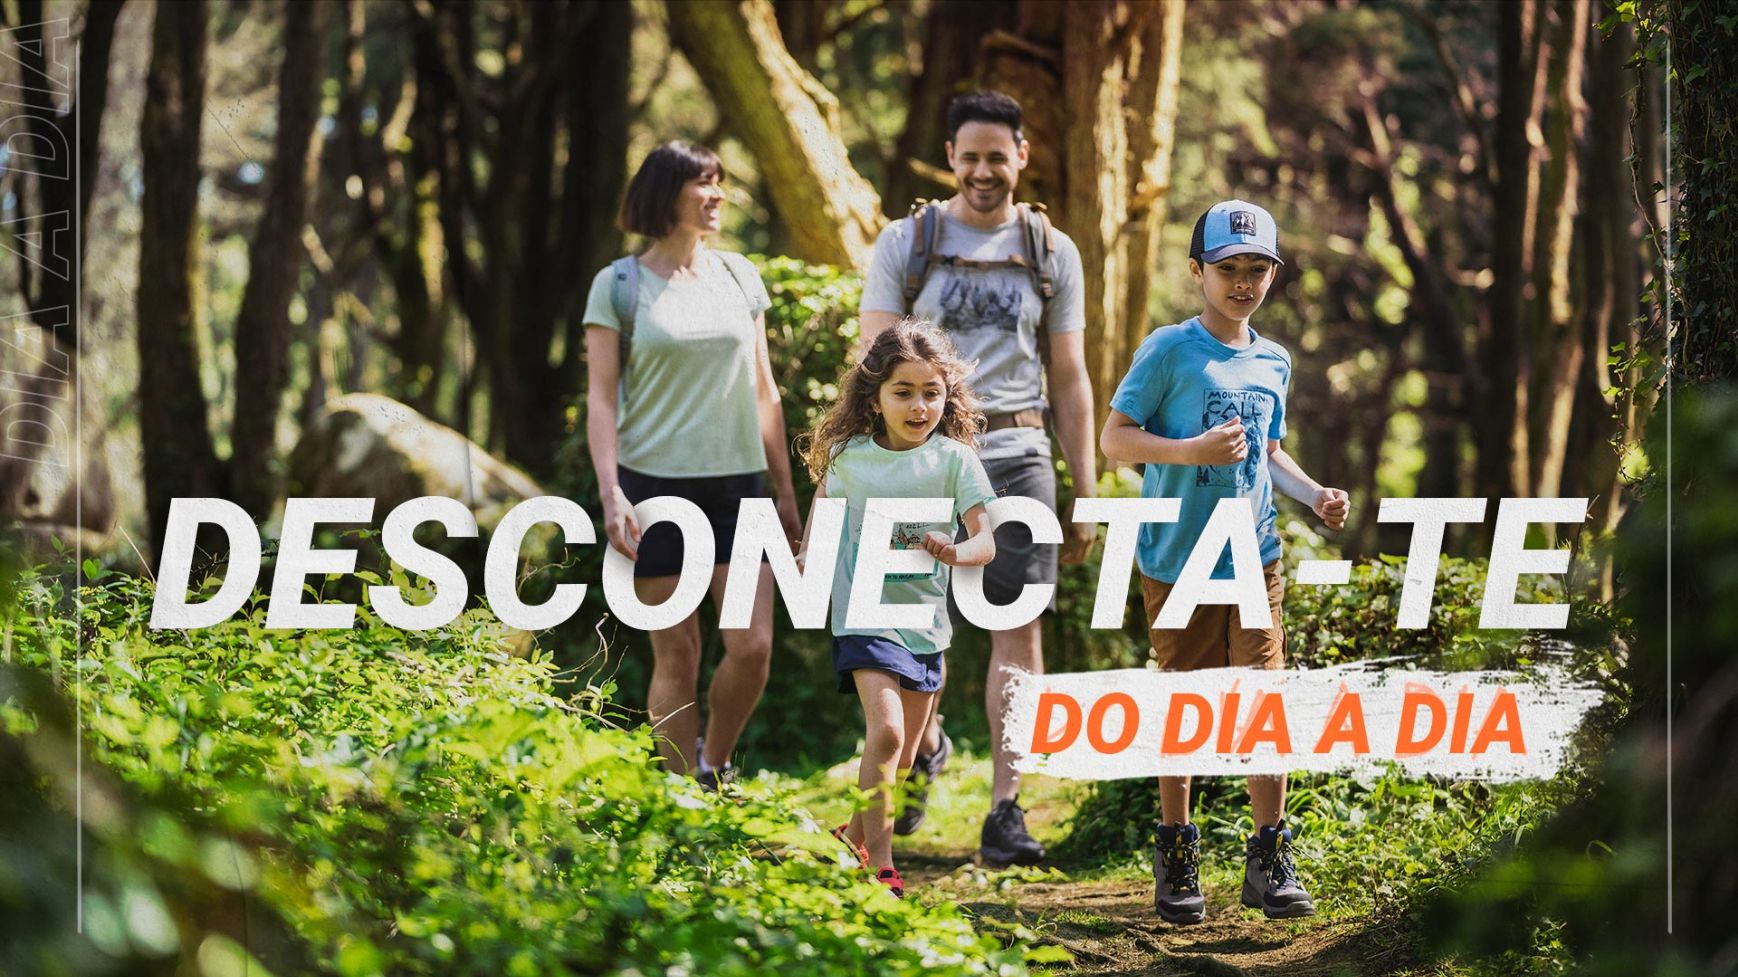 Decathlon desafia os portugueses a caminhar na natureza